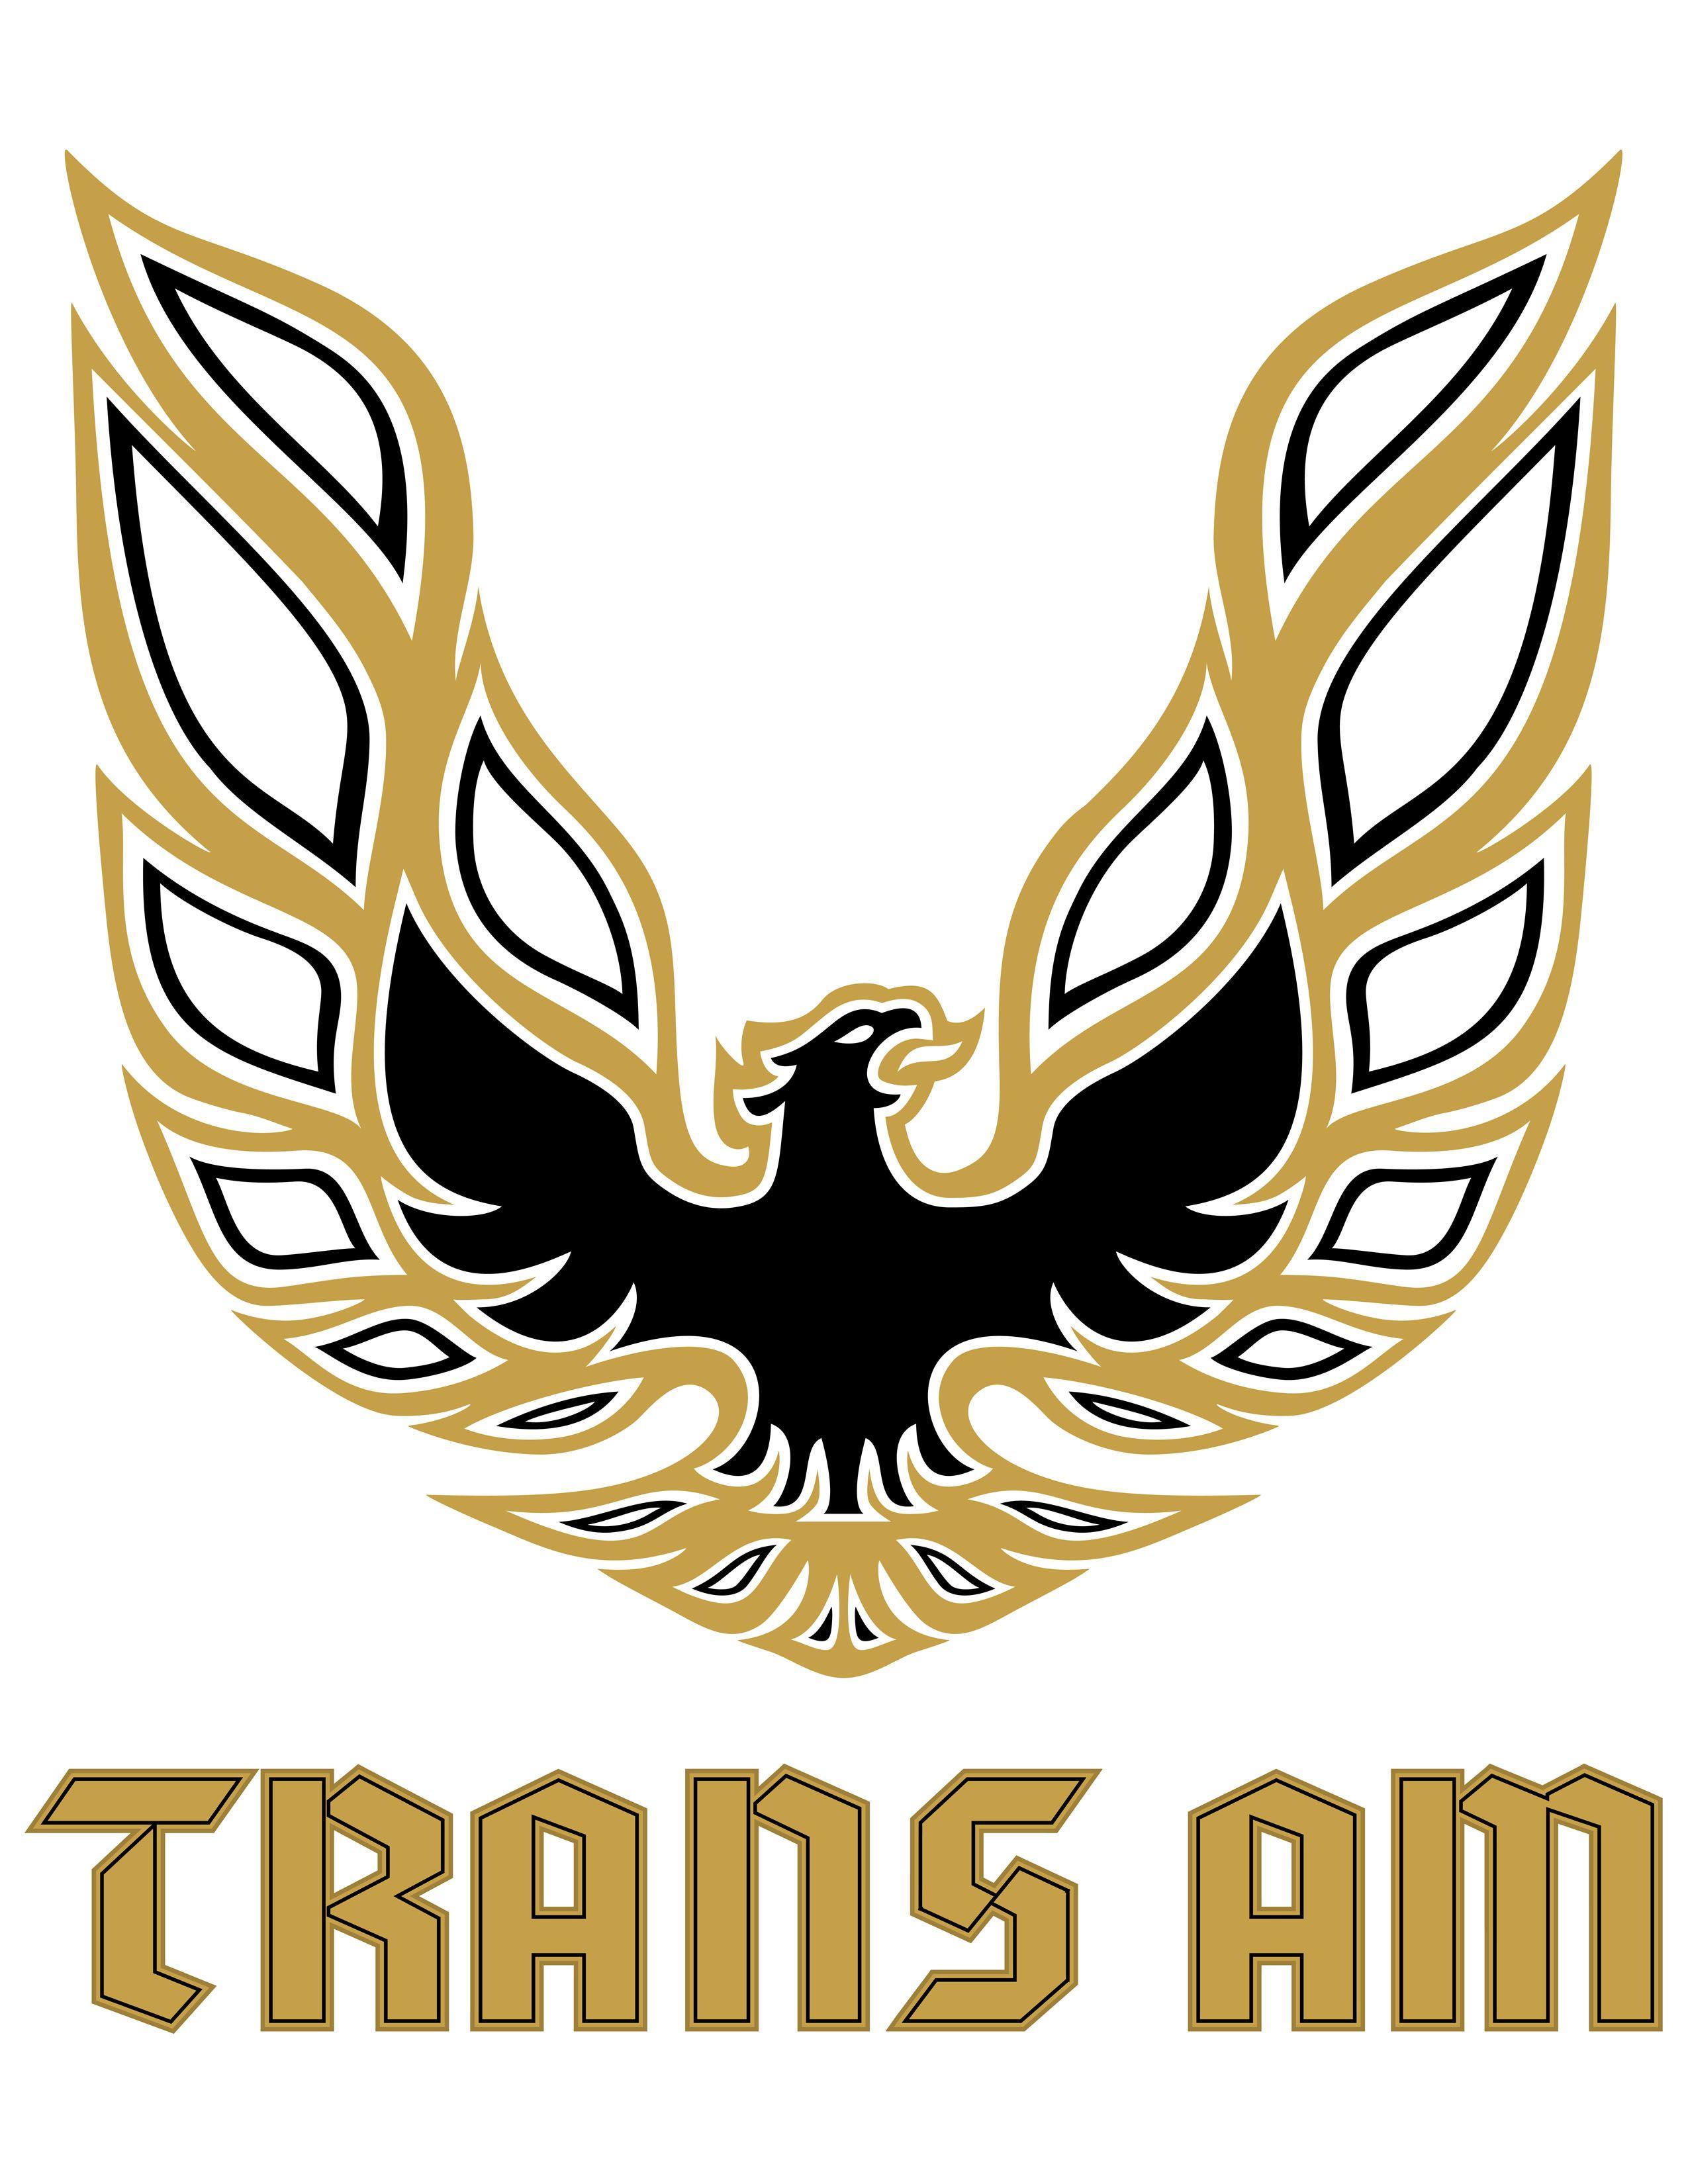 Pontiac Firebird Logo - trans am decal.. 1978 Trans Am. The text logo is the front